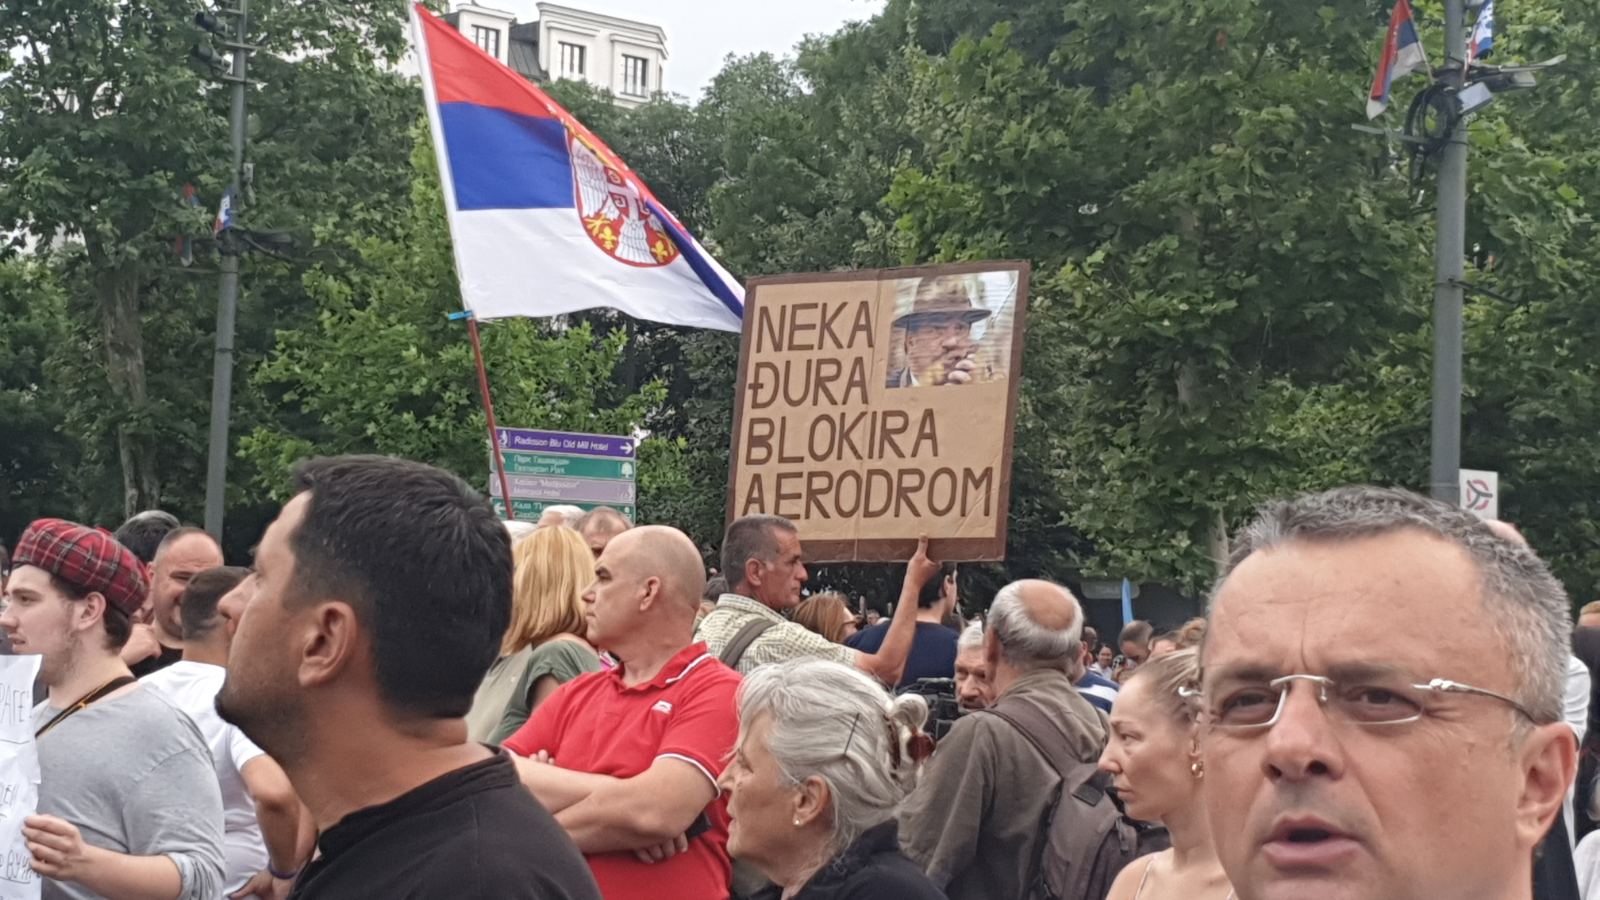 "Zar je bitno da li sam s Metohije ili s Dorćola?": Osmi protest "Srbija protiv nasilja" u slikama (FOTO) 9